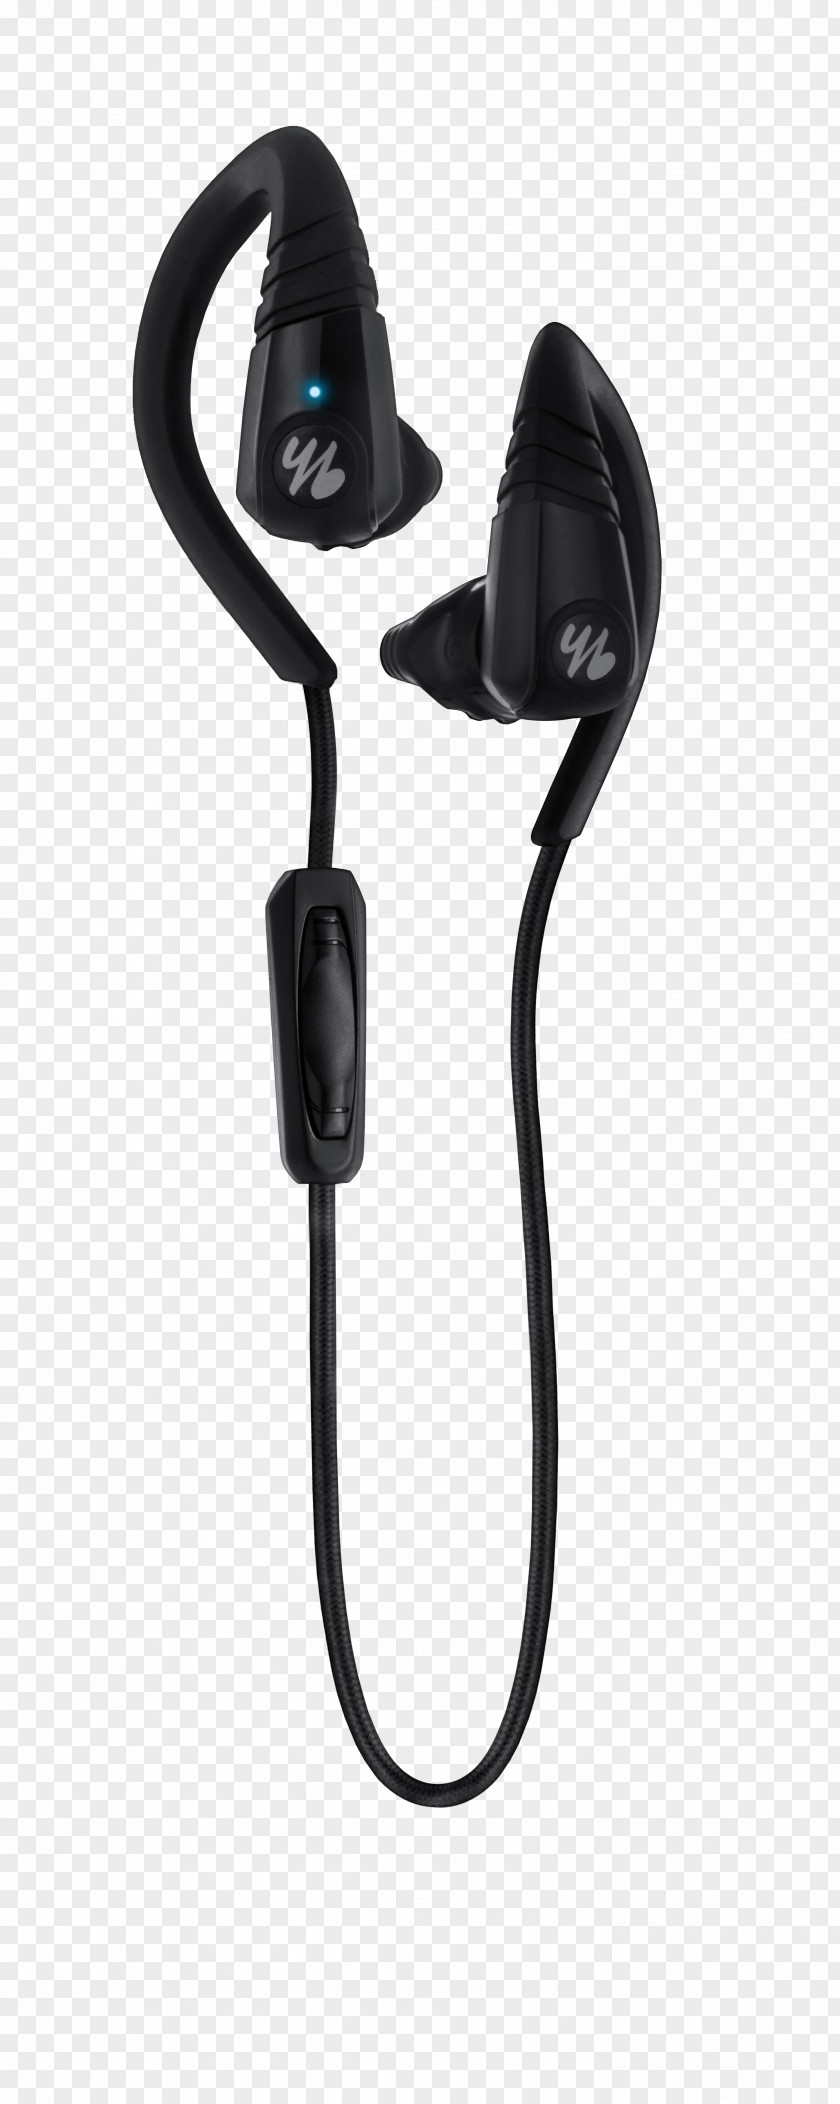 Headphones Microphone Yurbuds Leap Wireless JBL Liberty Bluetooth PNG